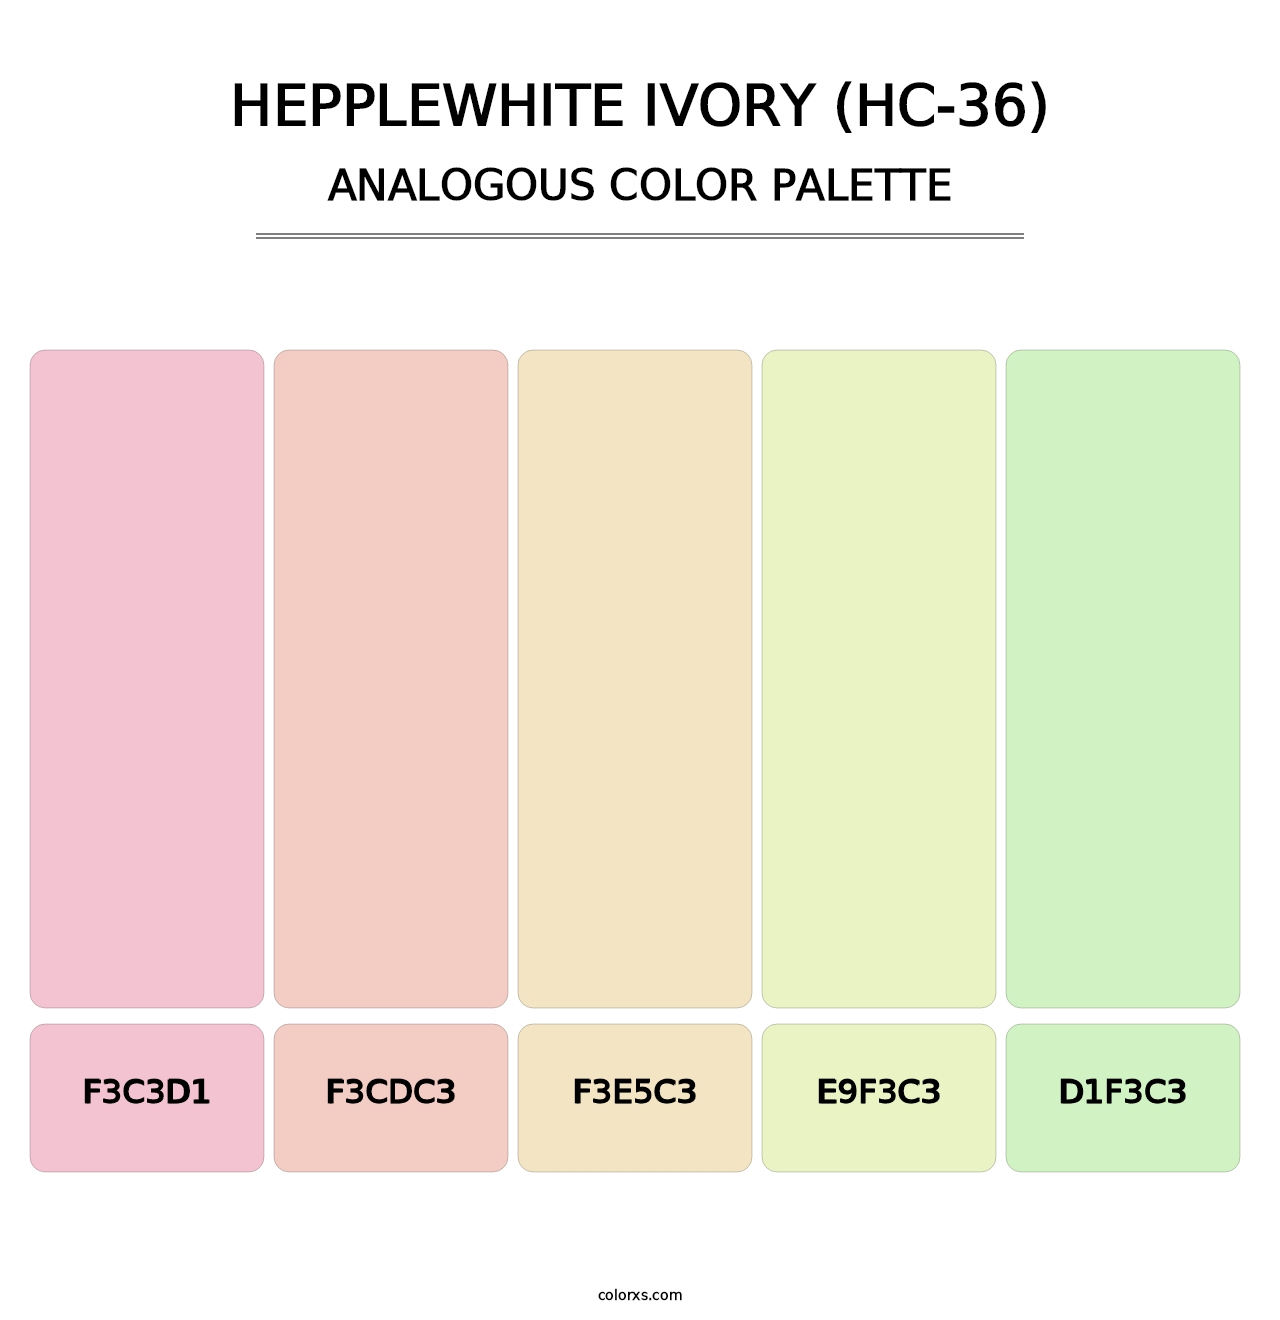 Hepplewhite Ivory (HC-36) - Analogous Color Palette